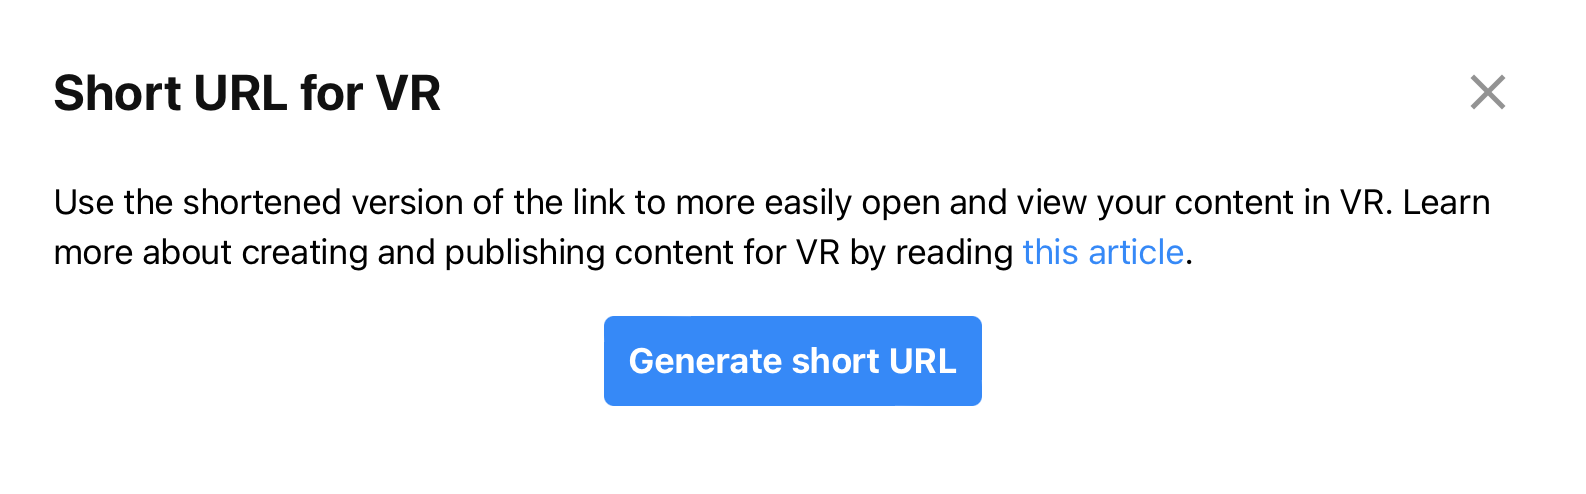 Generate Short URL